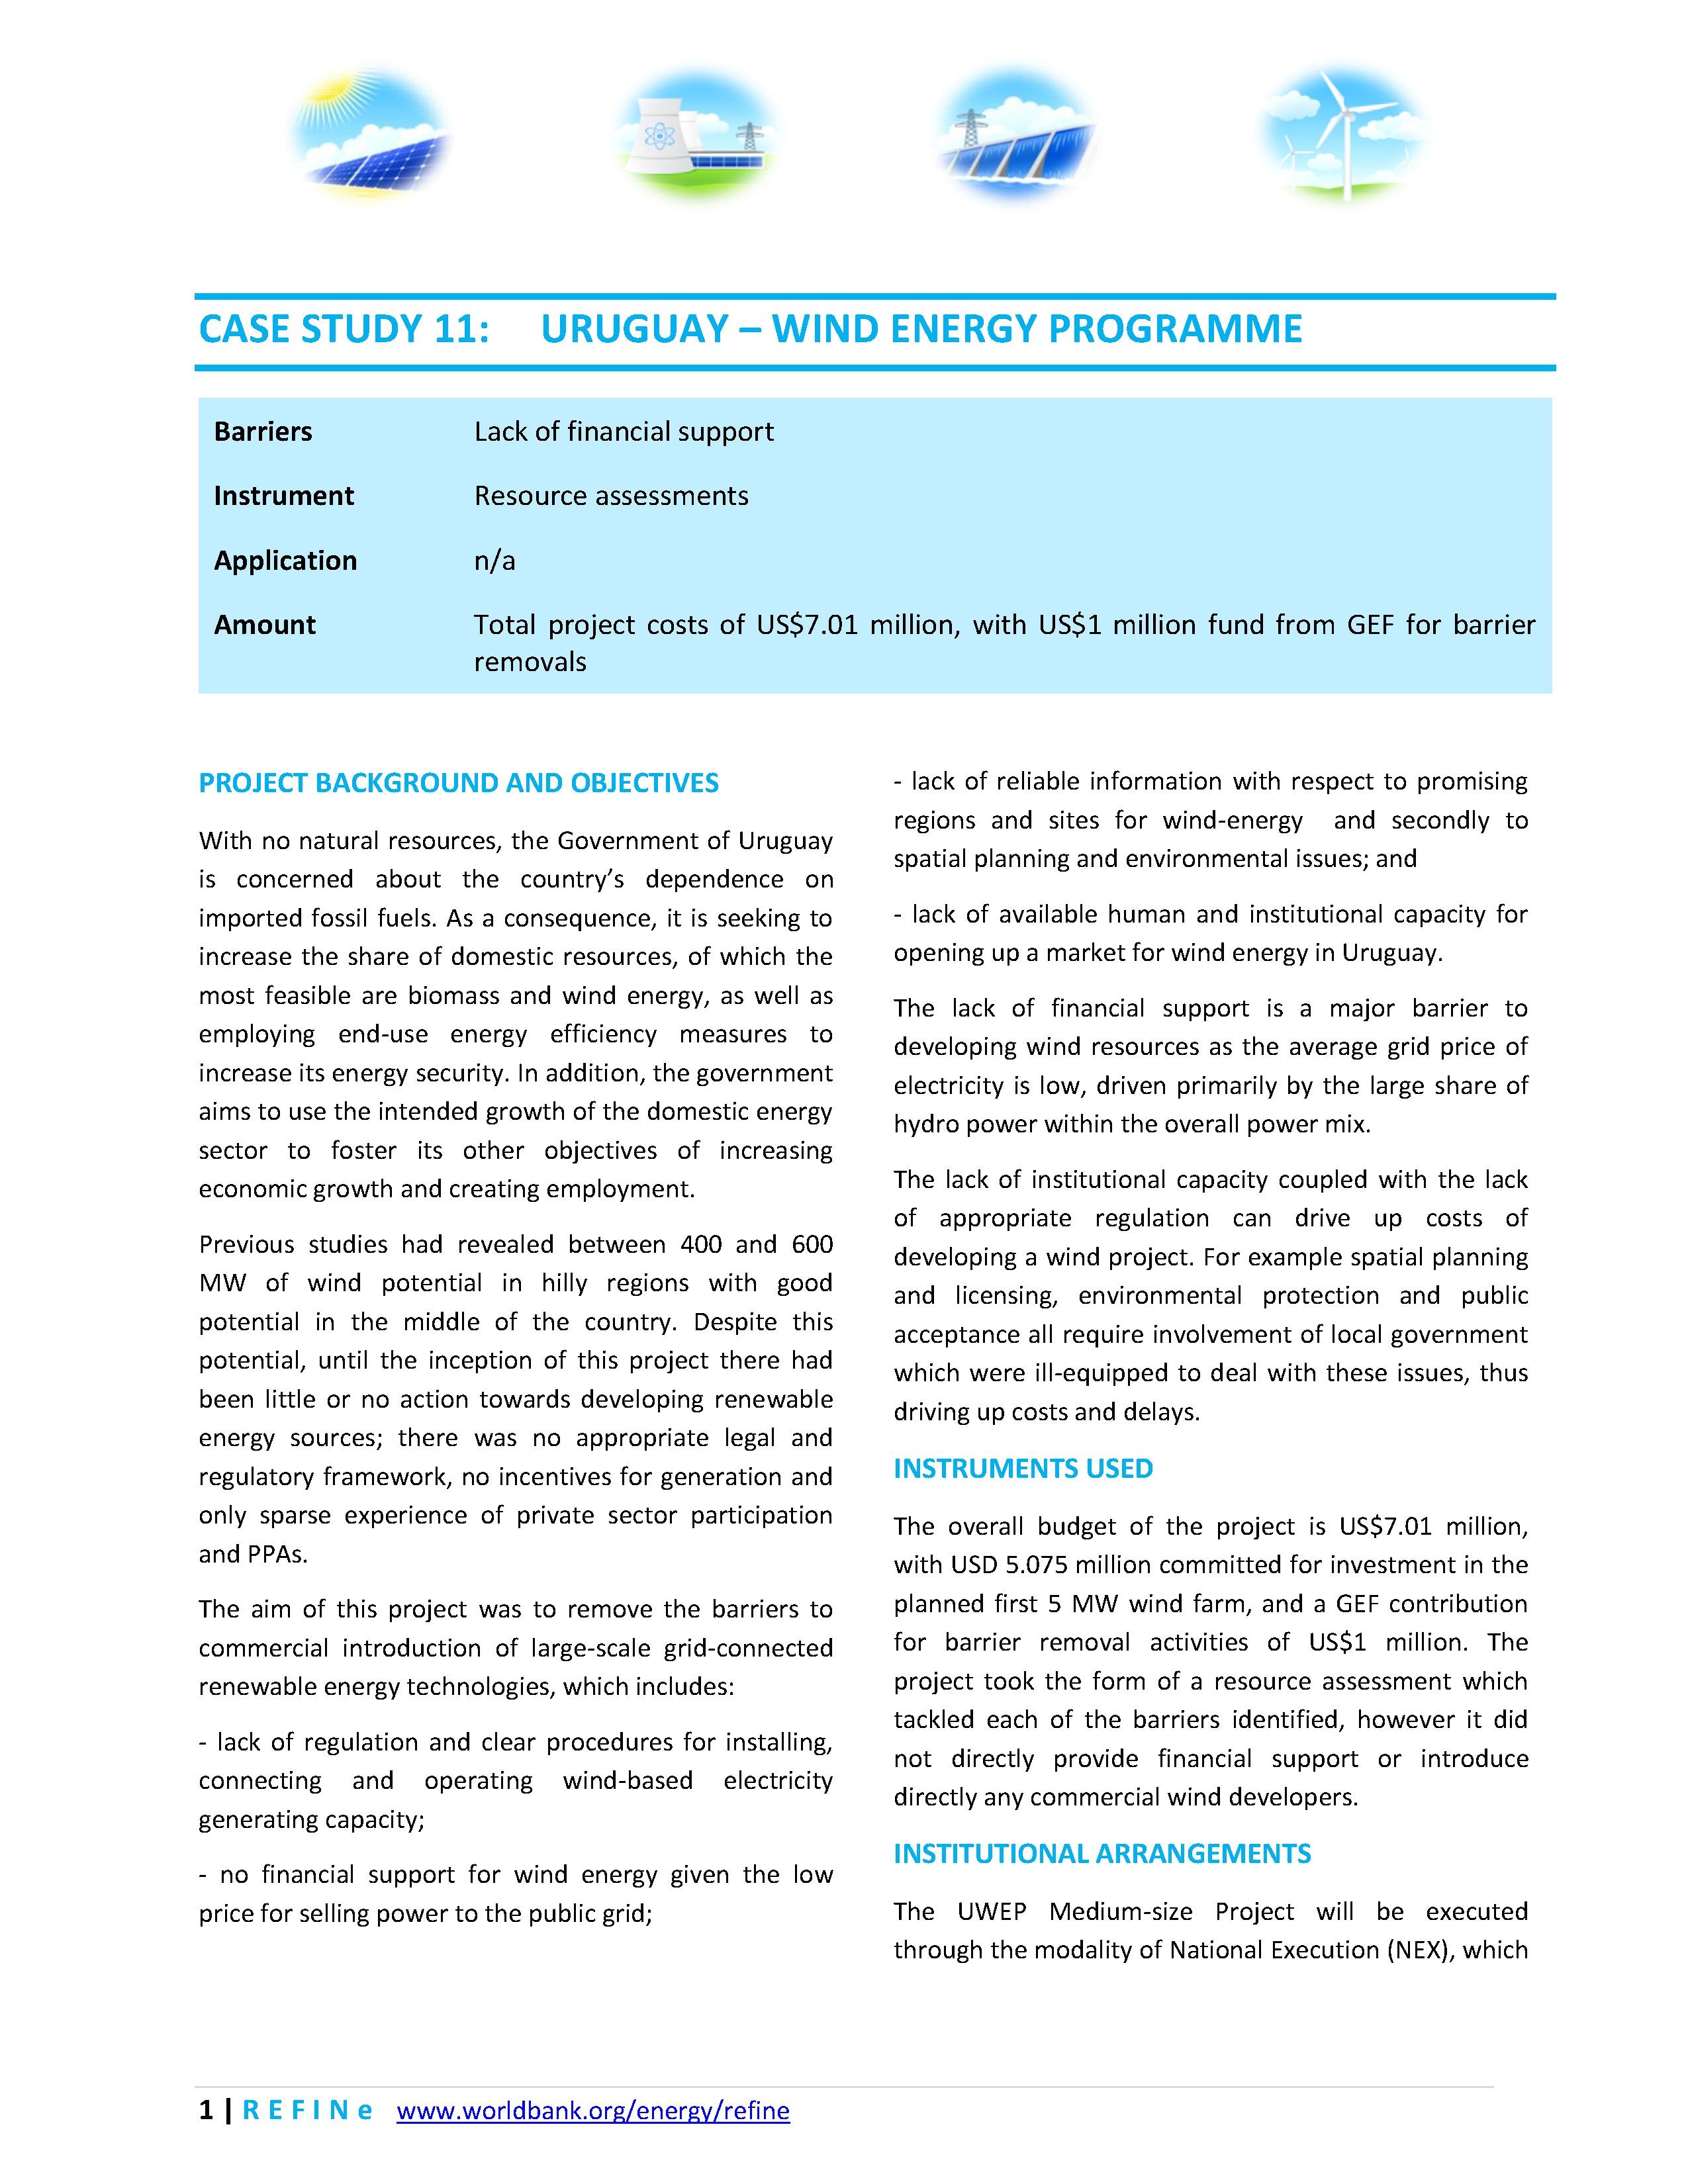 File:Uruguay Wind Energy Programme.pdf